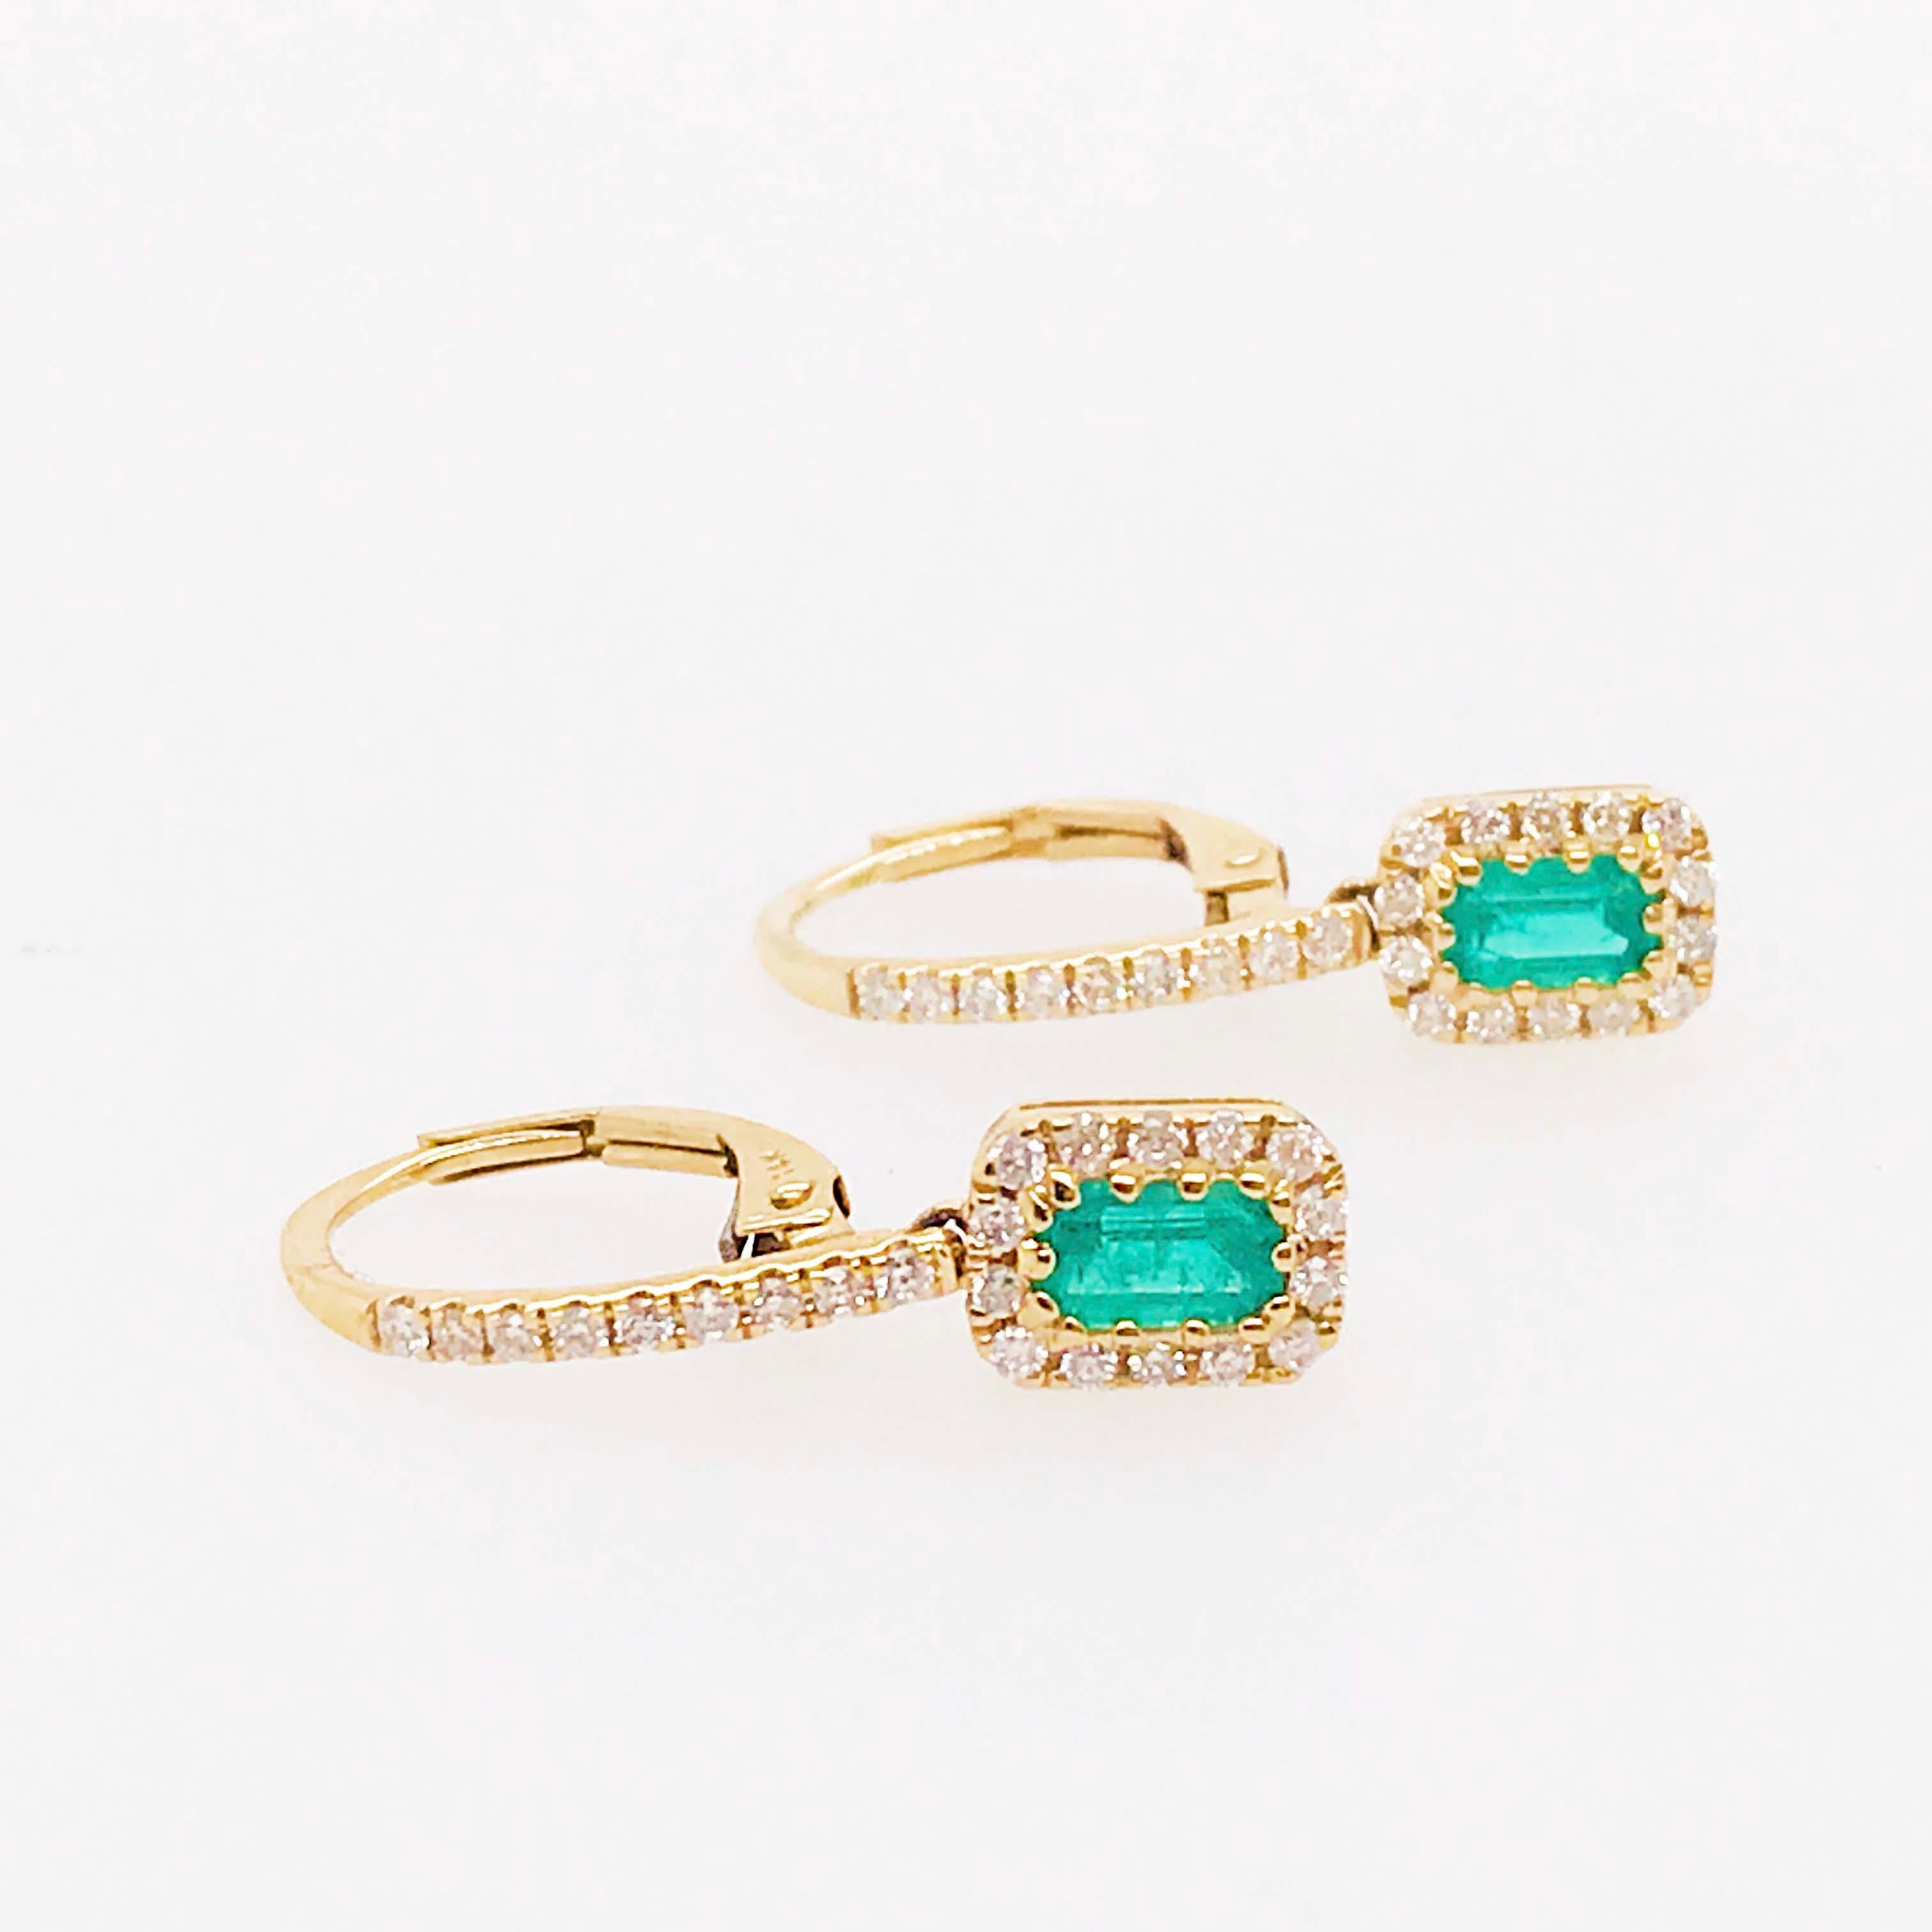 Original Emerald and Diamond Earring Dangles in 14 Karat Yellow Gold 4